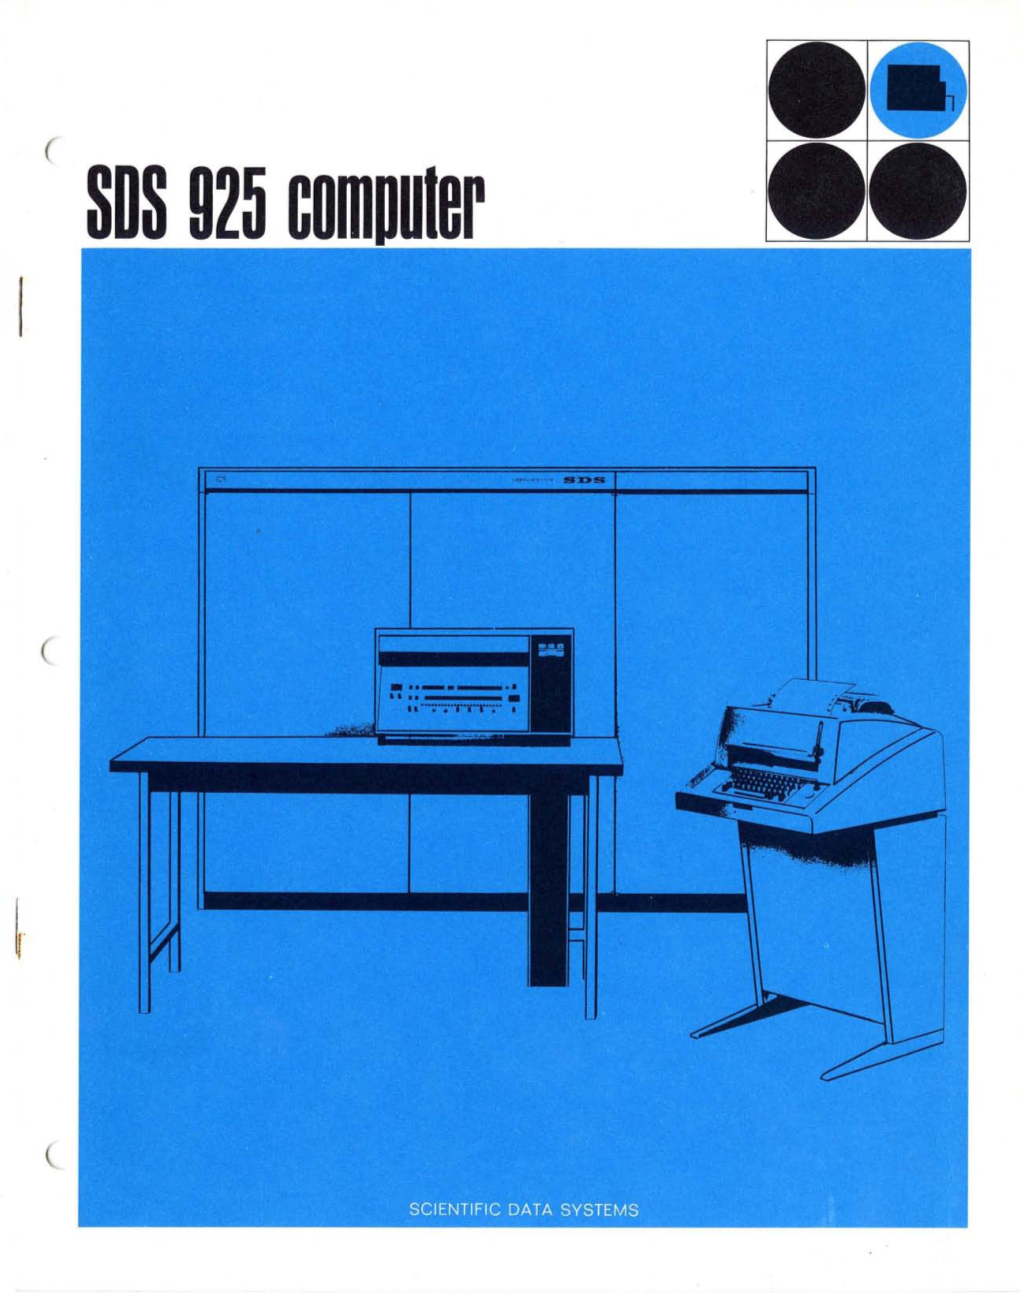 SDS 925 Computer, 1964